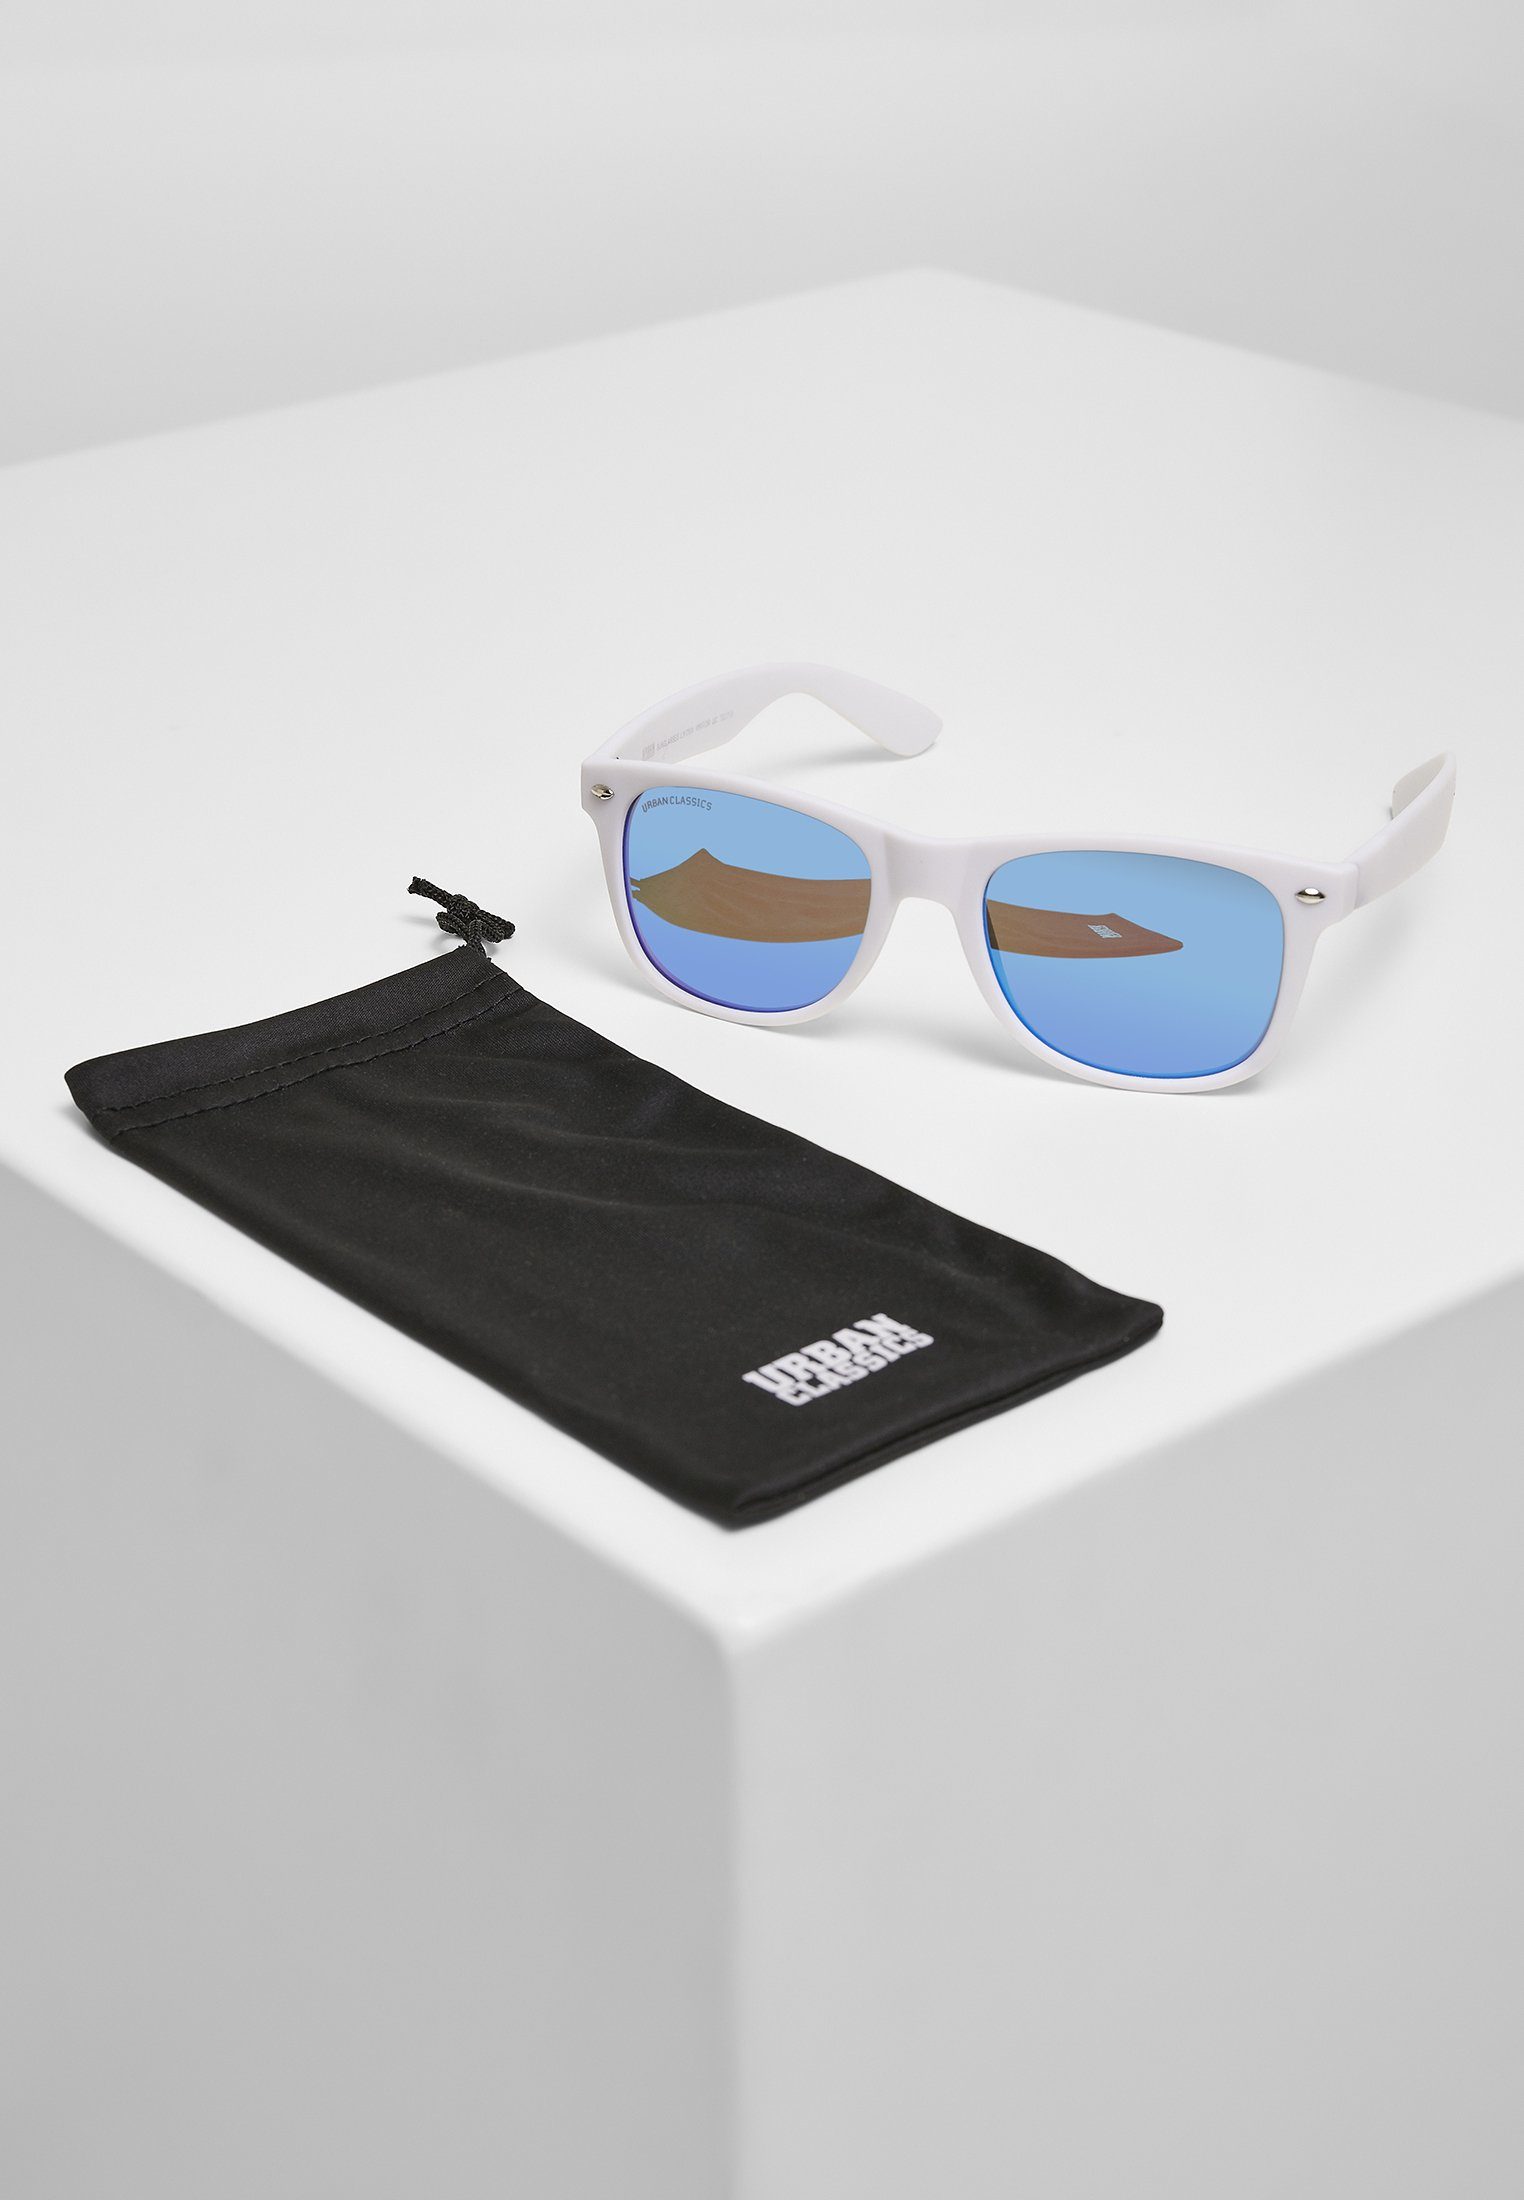 Accessoires UC Mirror Sunglasses white/blue URBAN Likoma CLASSICS Sonnenbrille